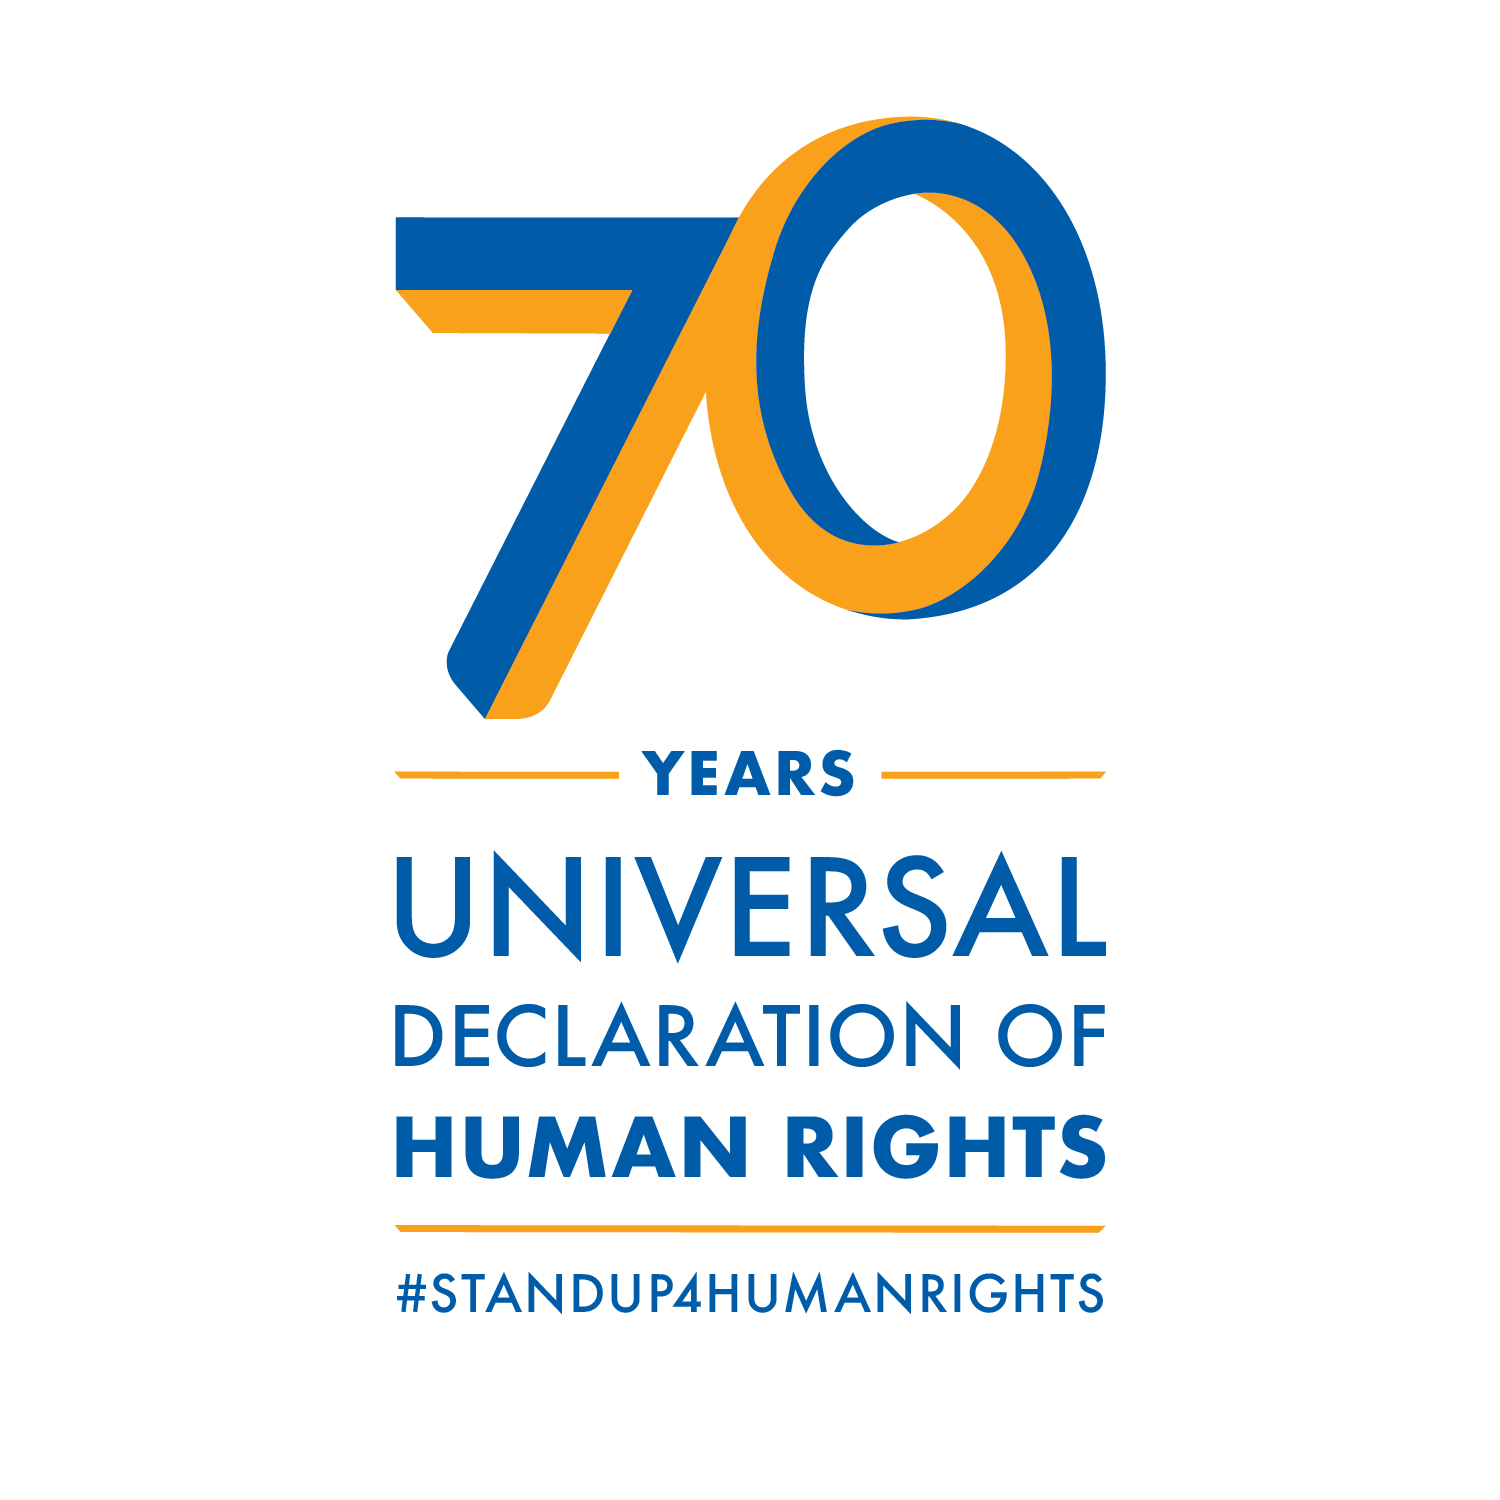 70 Years Universal Declaration of Human Rights #StandUp4HumanRights